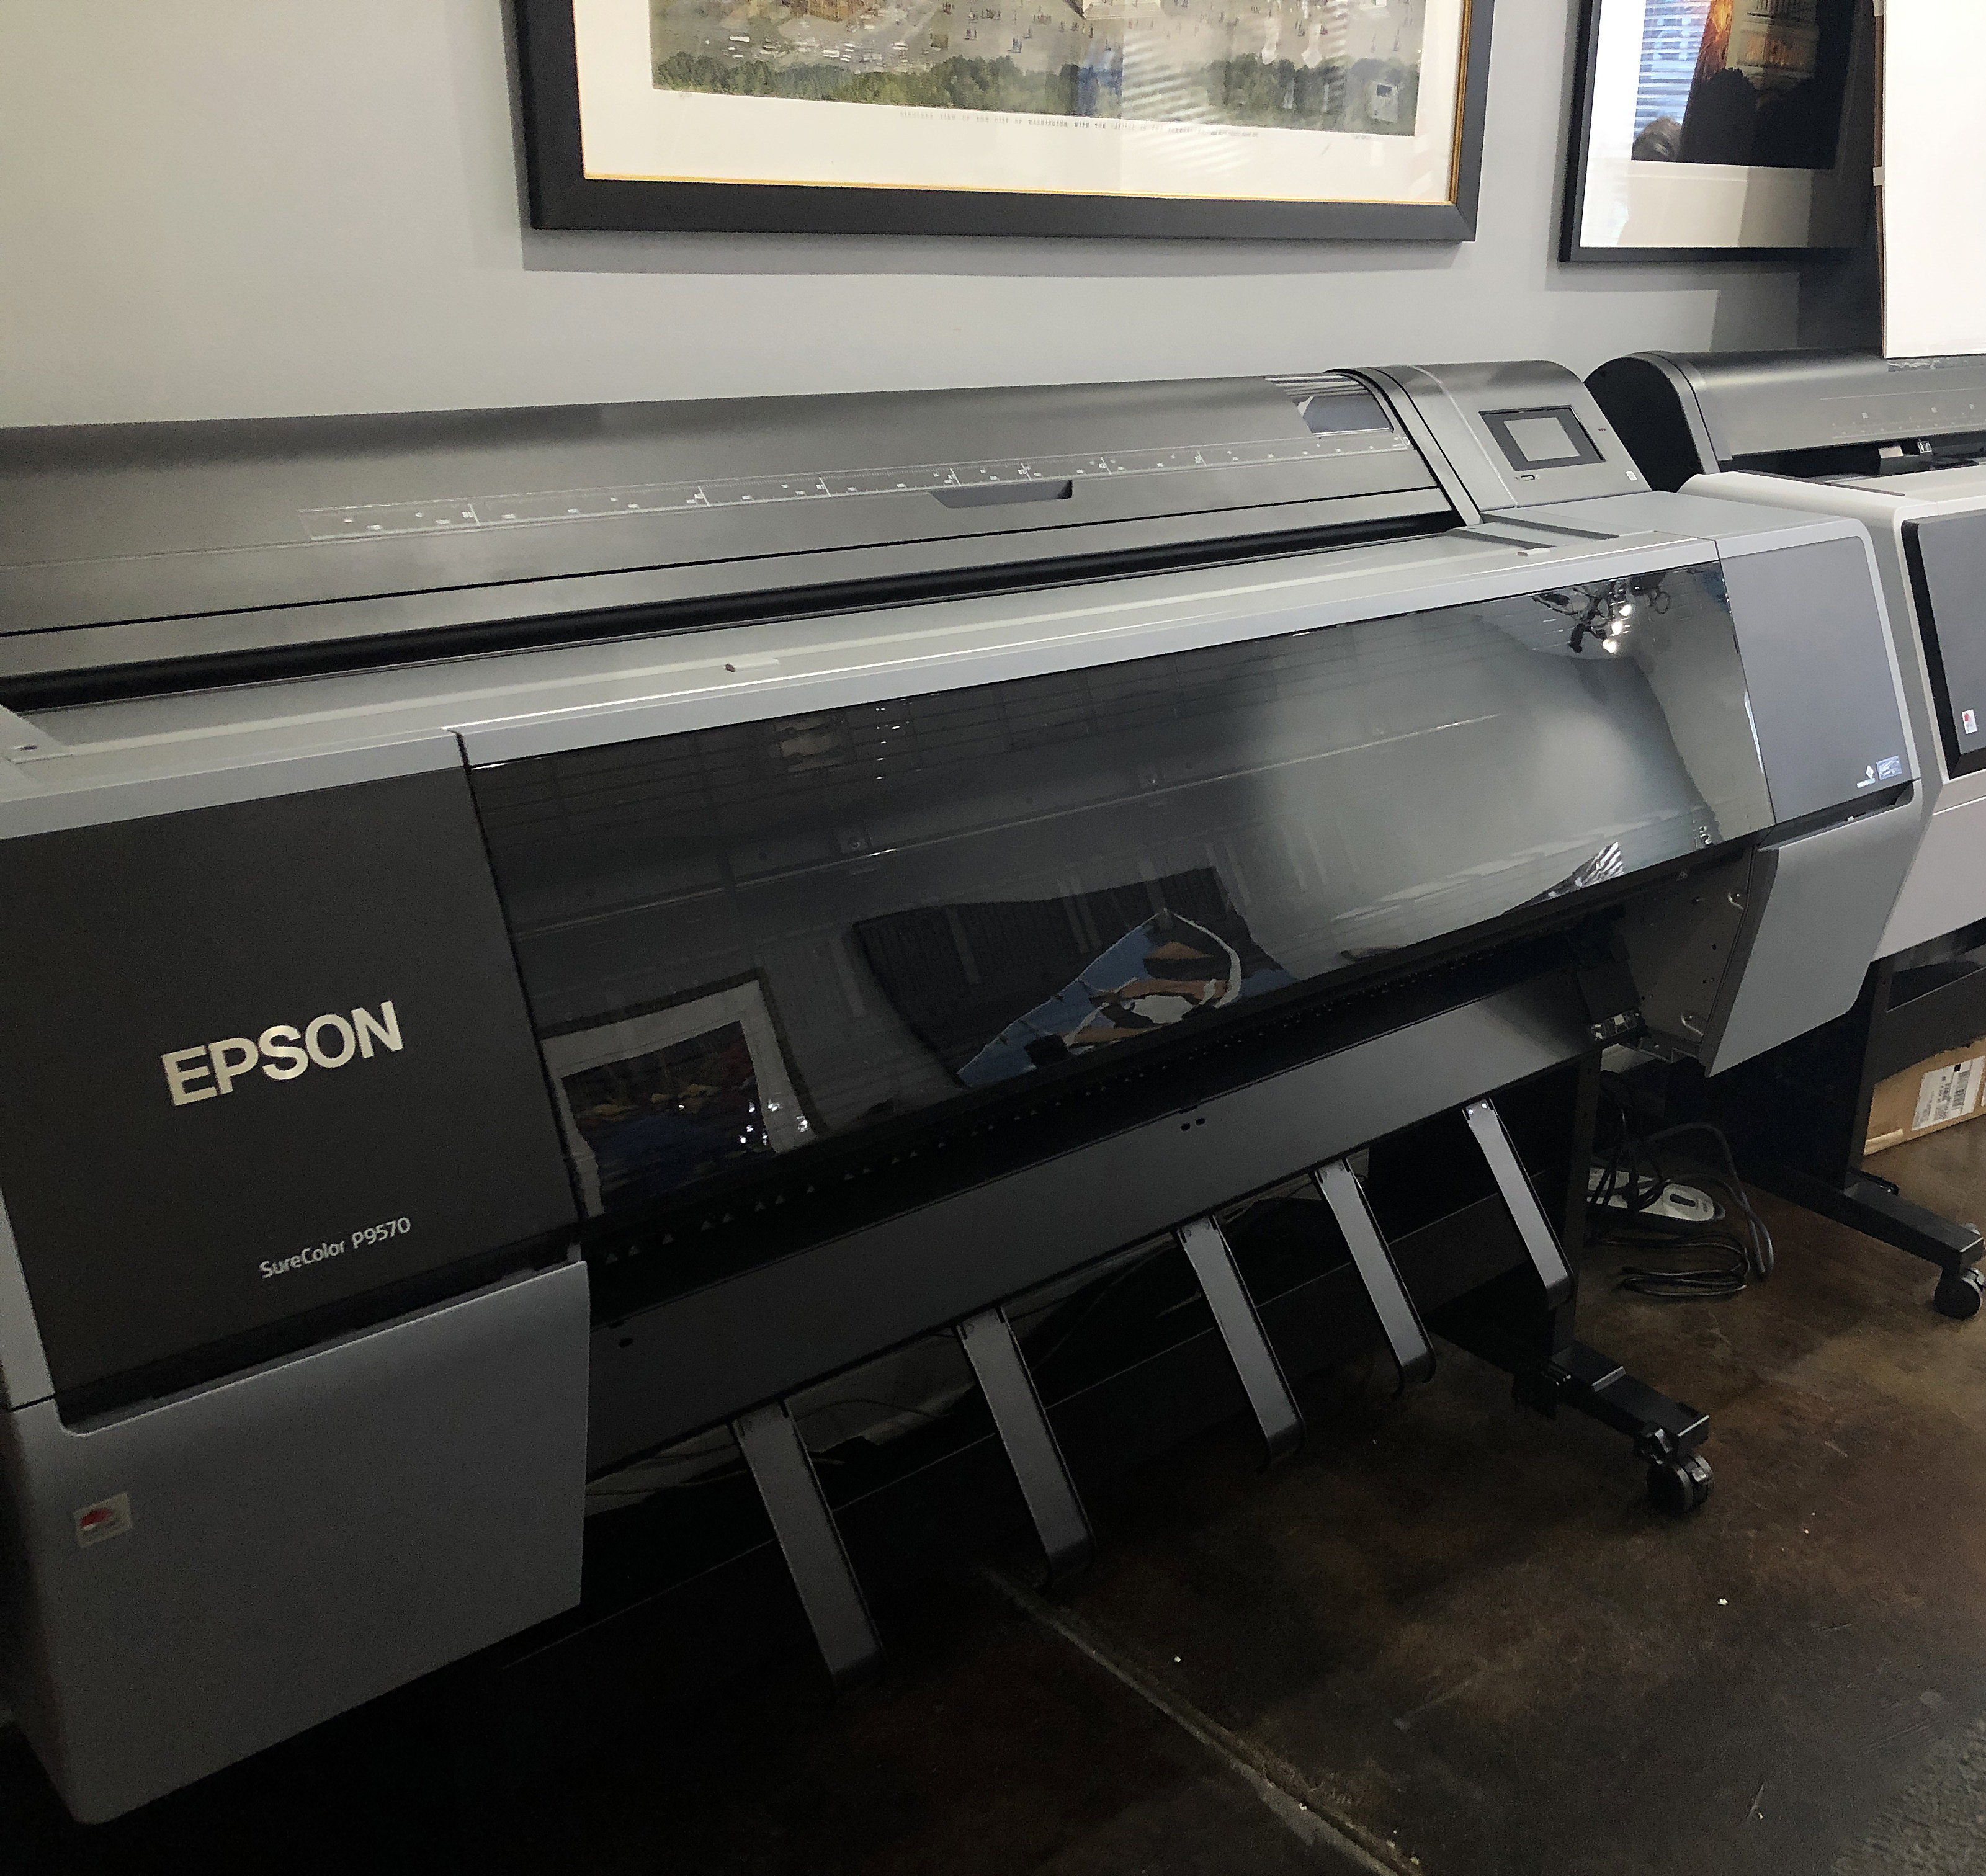 Epson P9570 Printer in our old studio